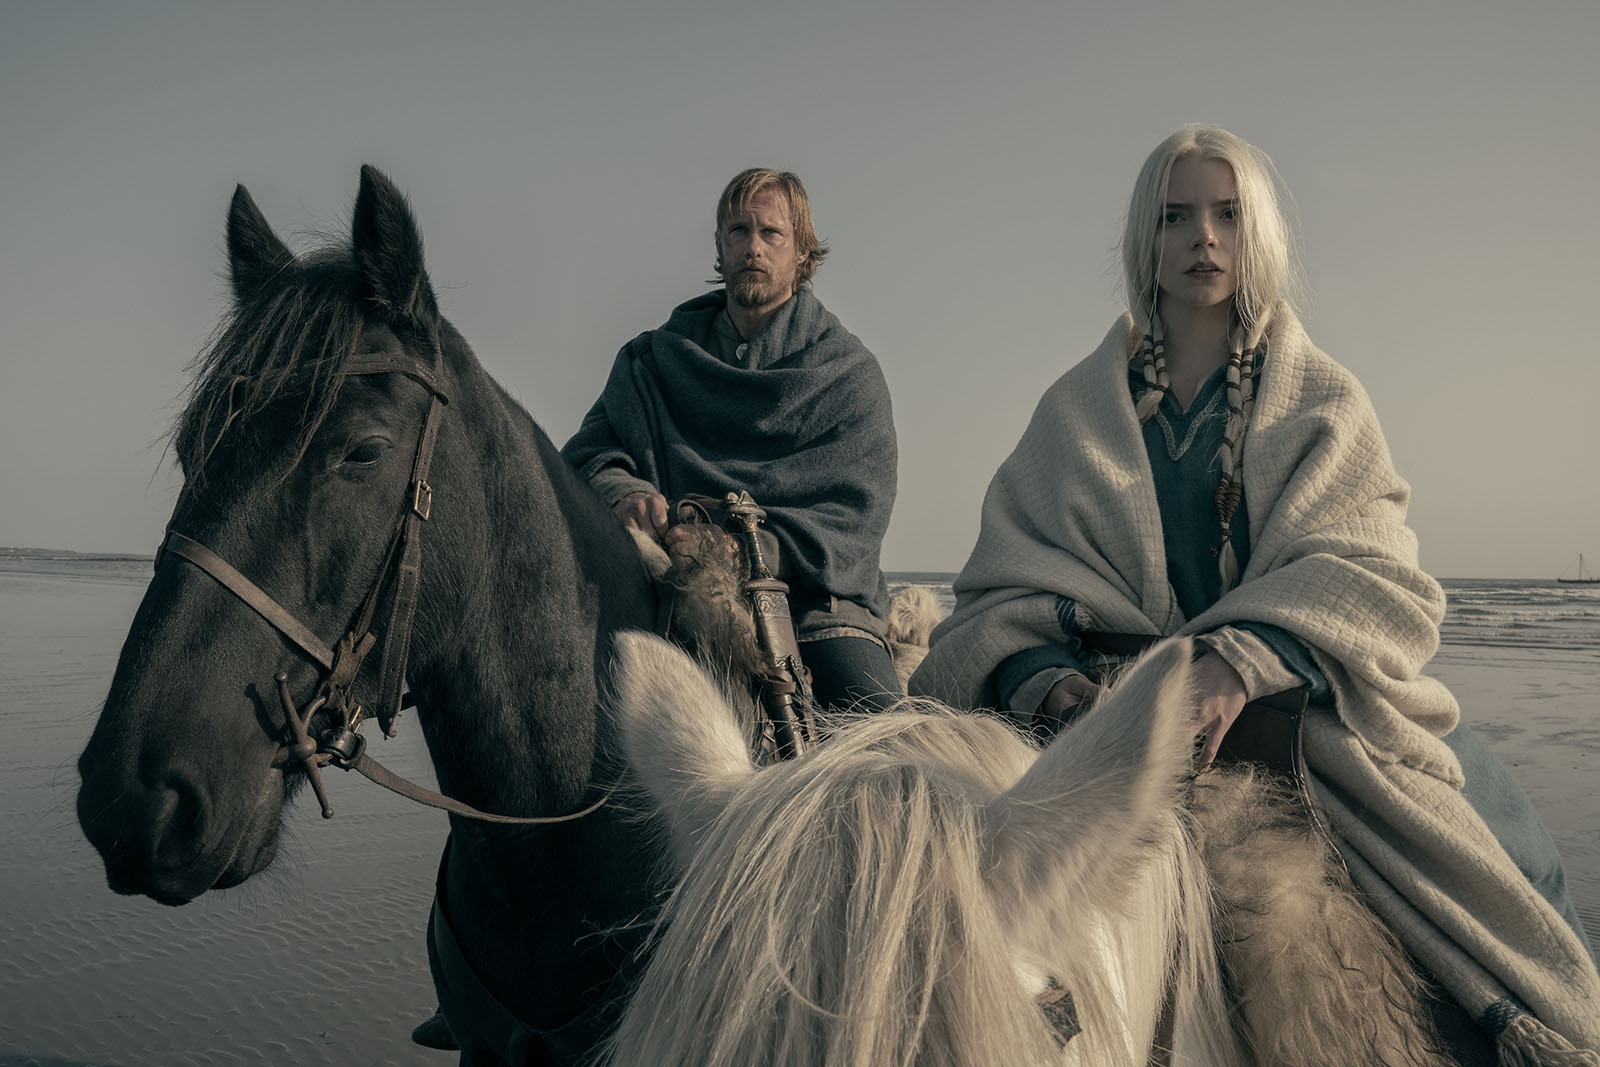 Alexandar Skarsgård as Amleth and Anya Taylor-Joy as Olga in The Northman. Image © Focus Features